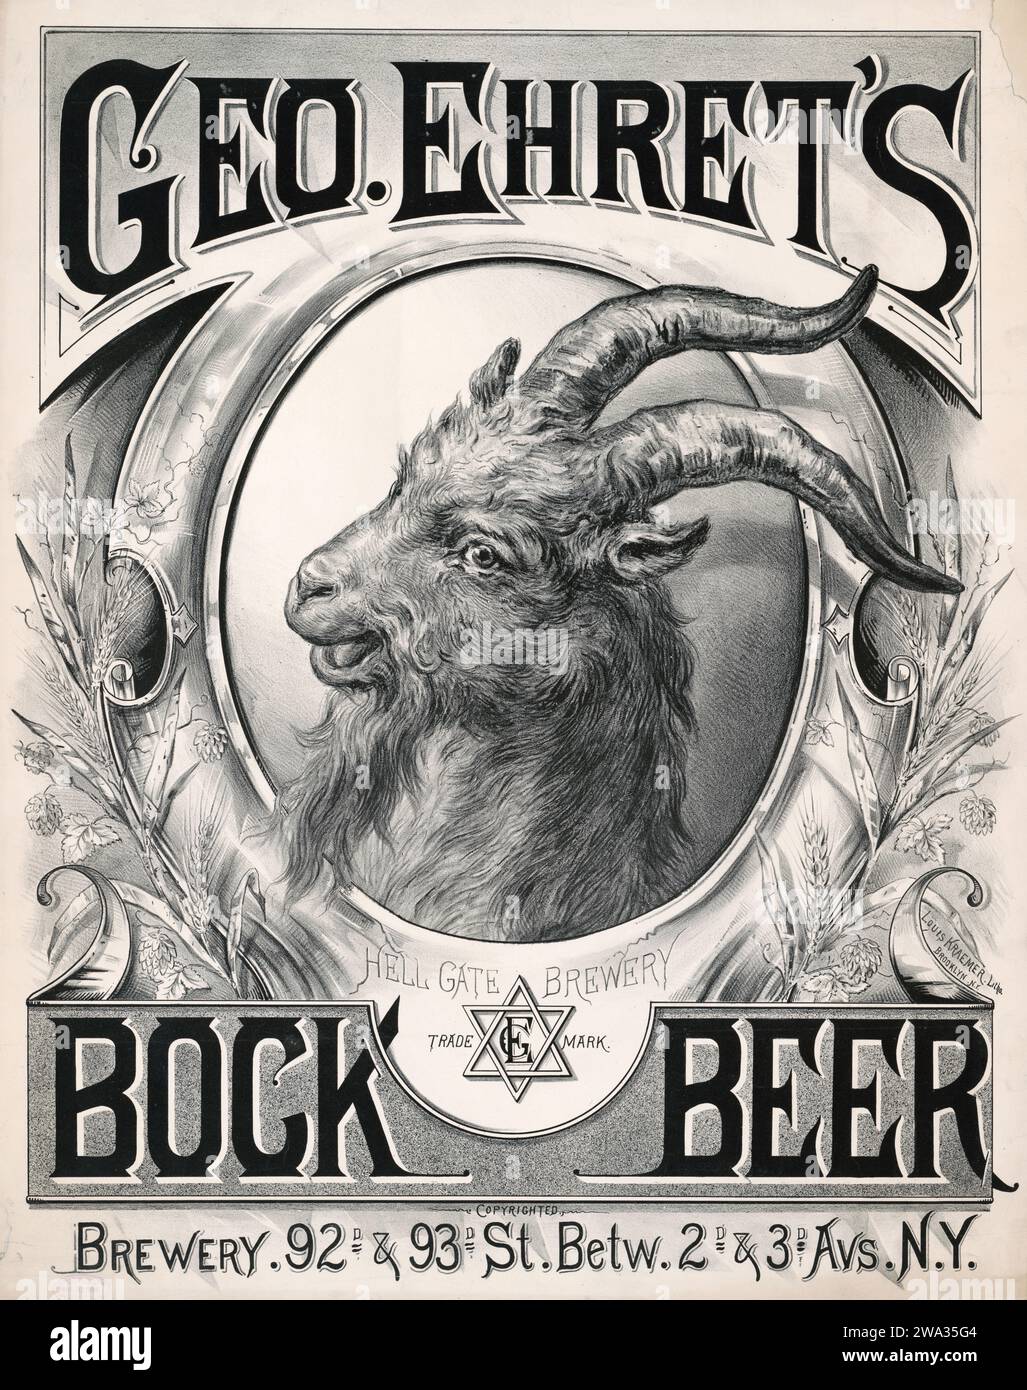 GEO. Ehret's Bock Beer, Hell Gate Brewery 1888 - Brooklyn, New York - affiche publicitaire de bière noire et blanche Banque D'Images